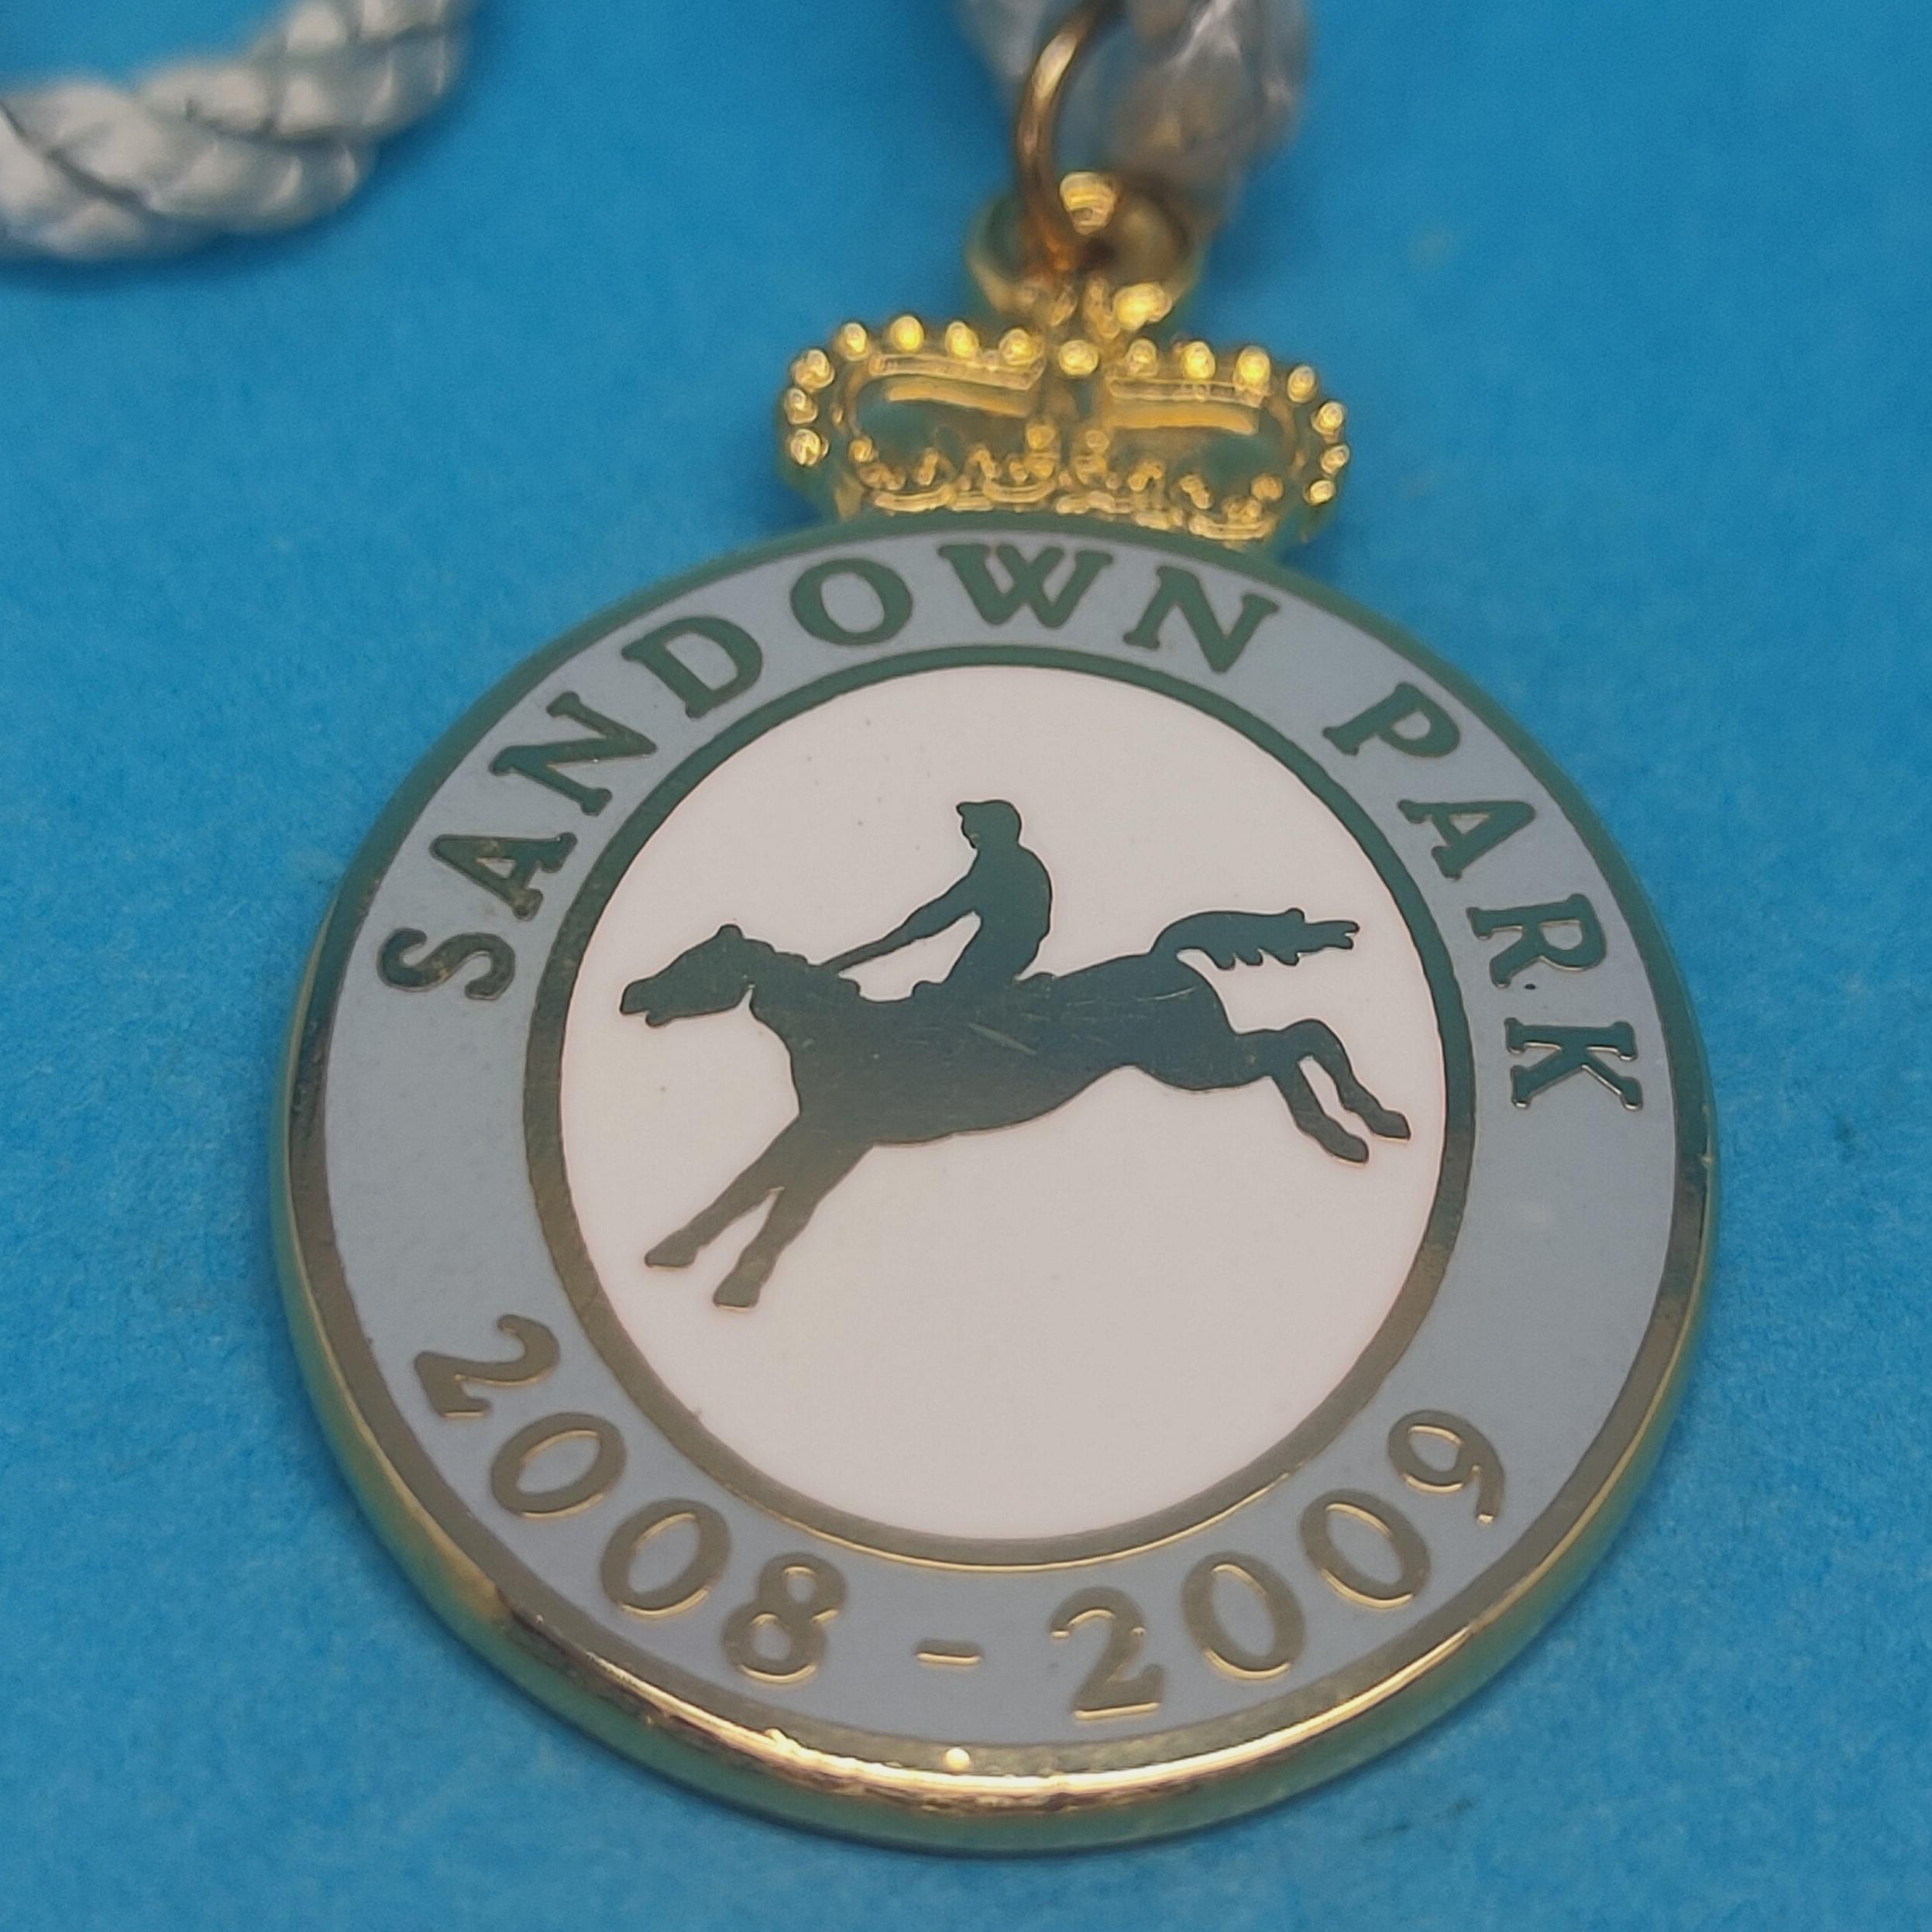 Sandown 2008 / 2009 Jumps